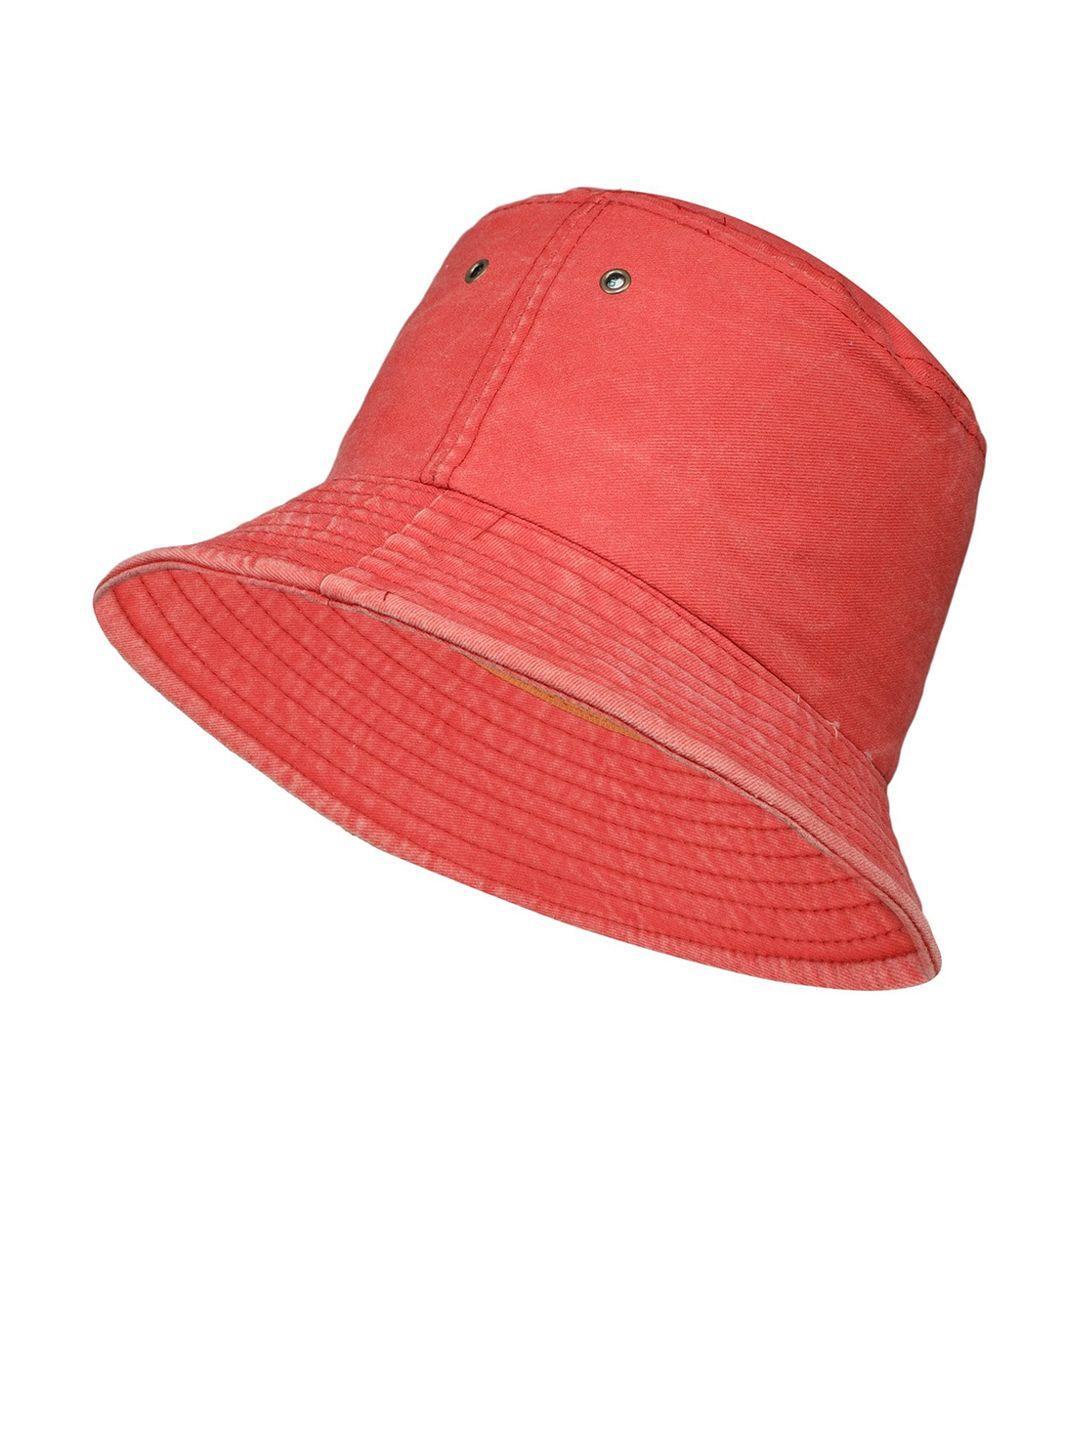 fabseasons unisex orange solid pure cotton sun hat